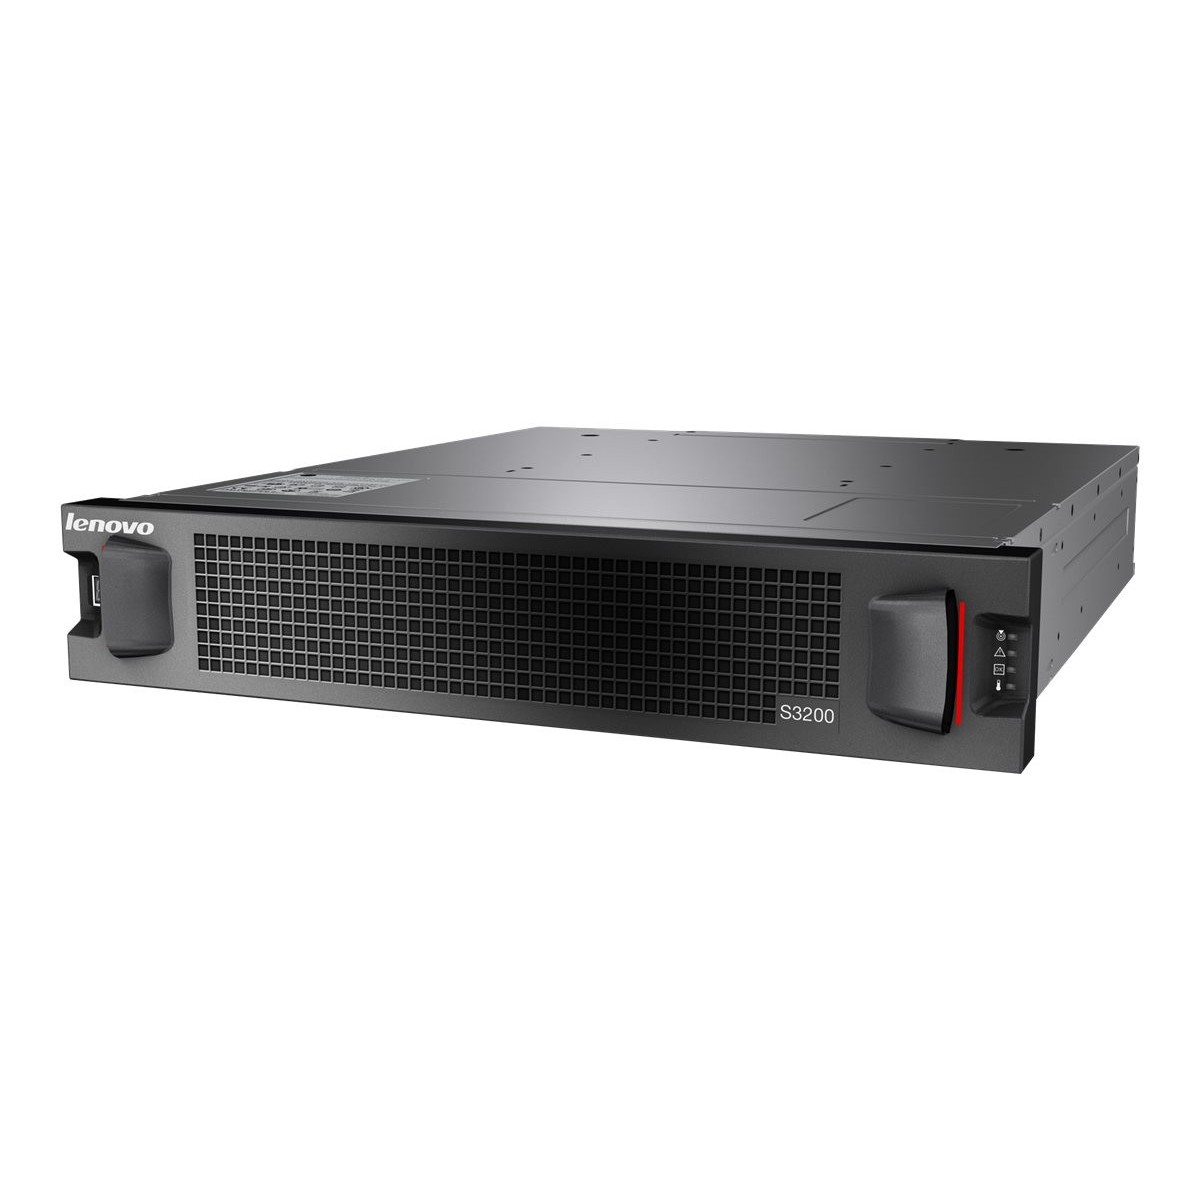 Lenovo Storage S3200 6411 24HDD SAS-2 - Disk array - SAN